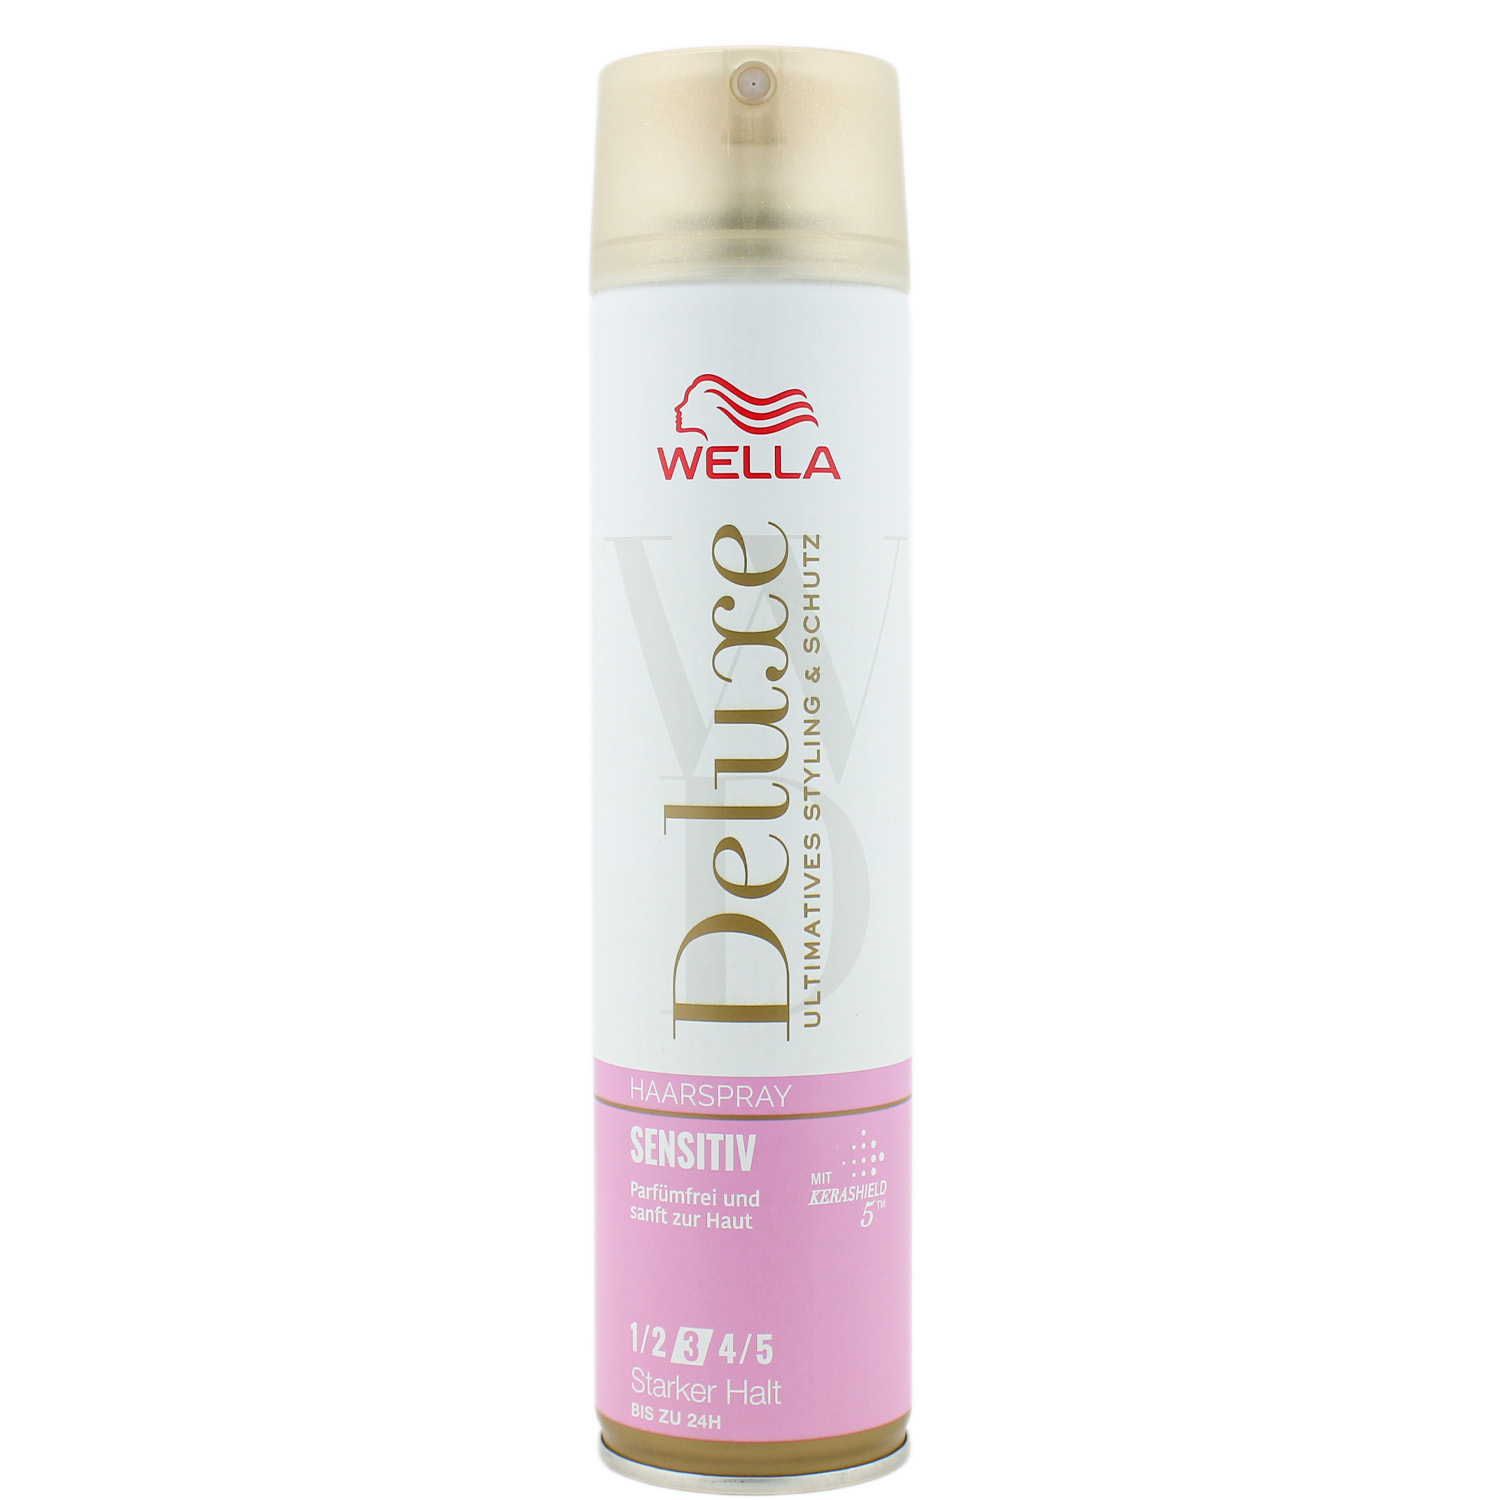 Wella Deluxe Sensitive Haarspray mit starkem Halt 200ml